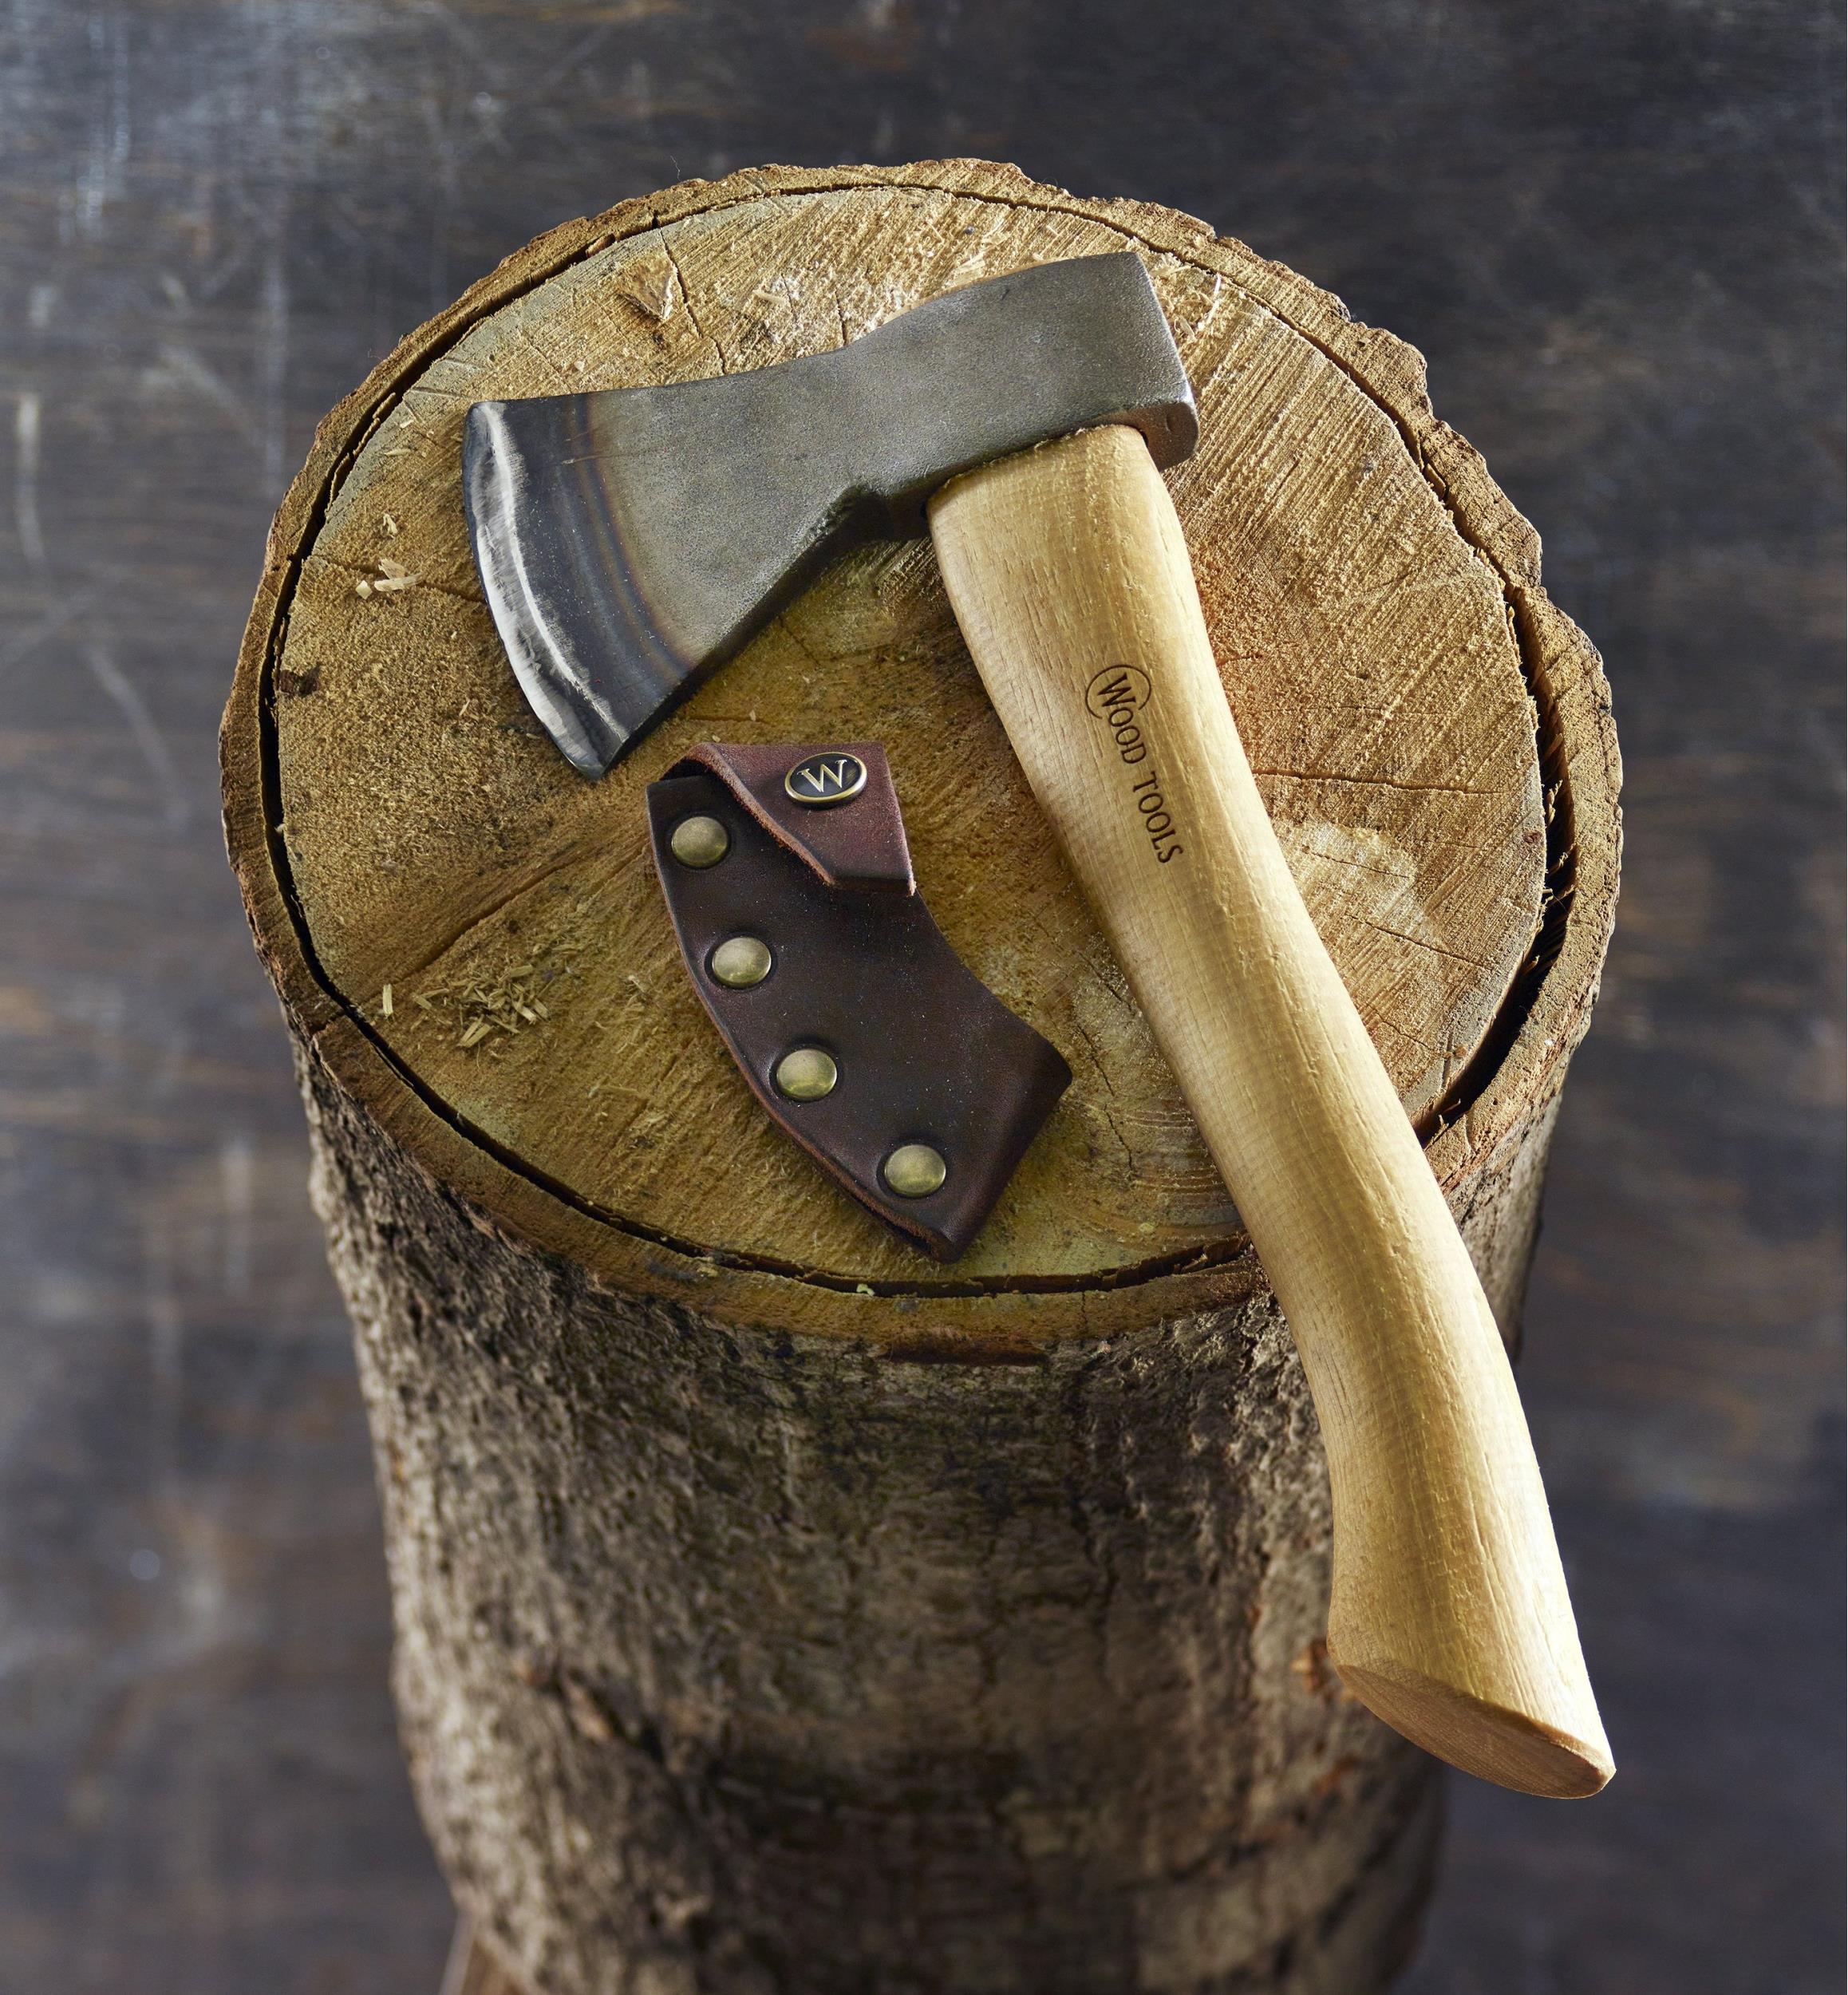 Wood carving axe, hand carpentry tool STRYI, Profi – Wood carving